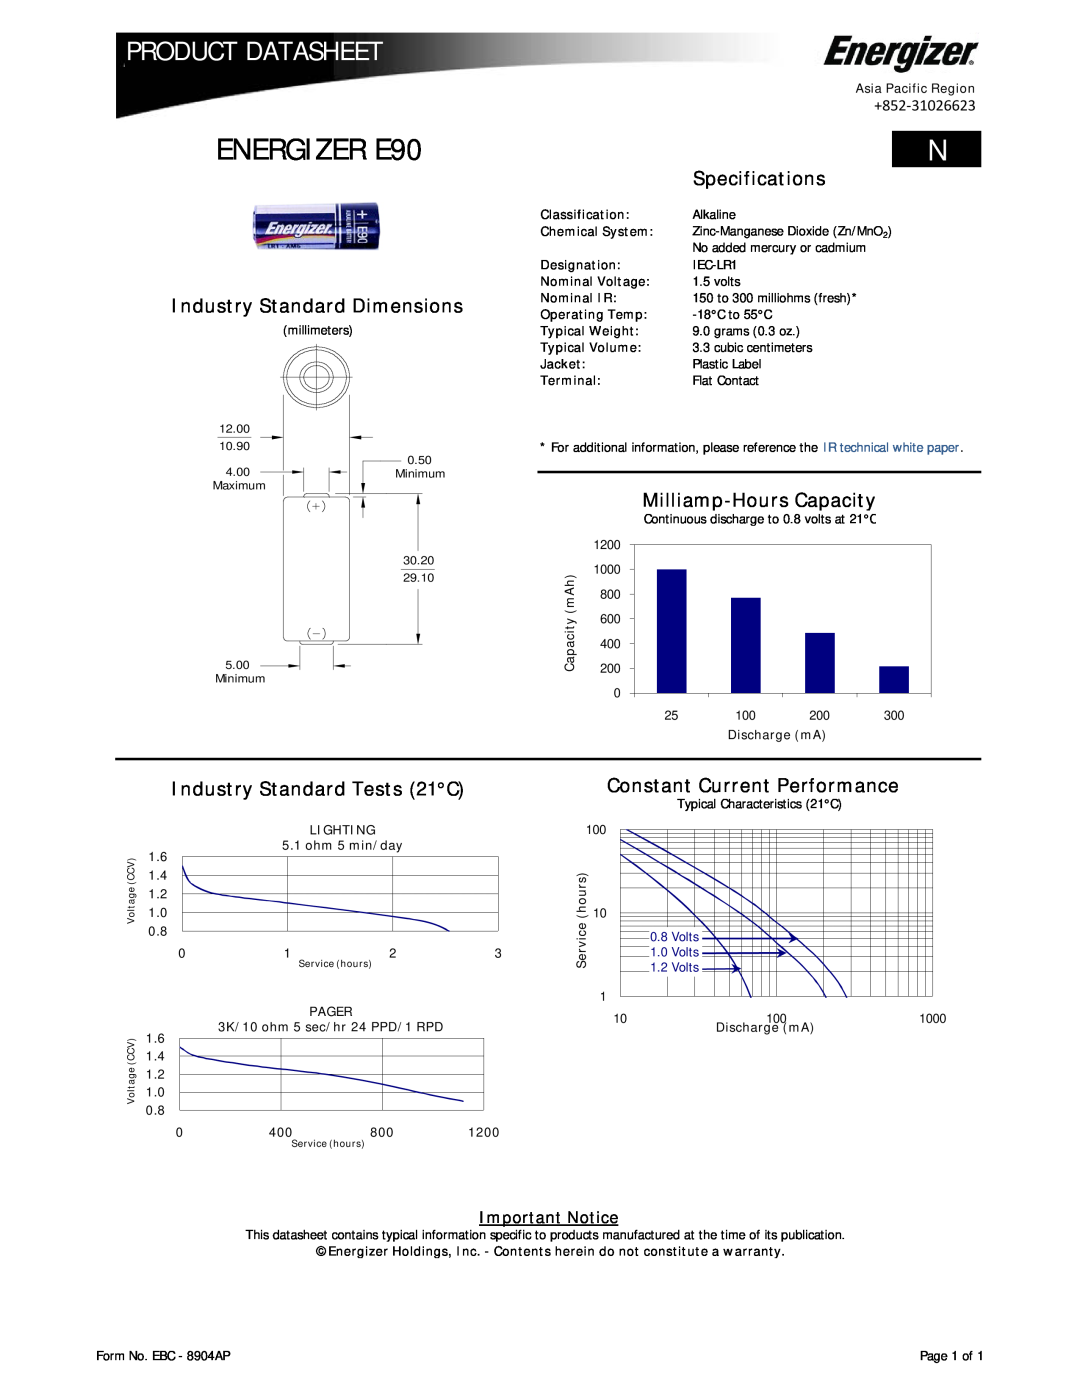 Energizer dimensions ENERGIZER E90, Product Datasheet, Industry Standard Dimensions, Industry Standard Tests 21C, Volts 